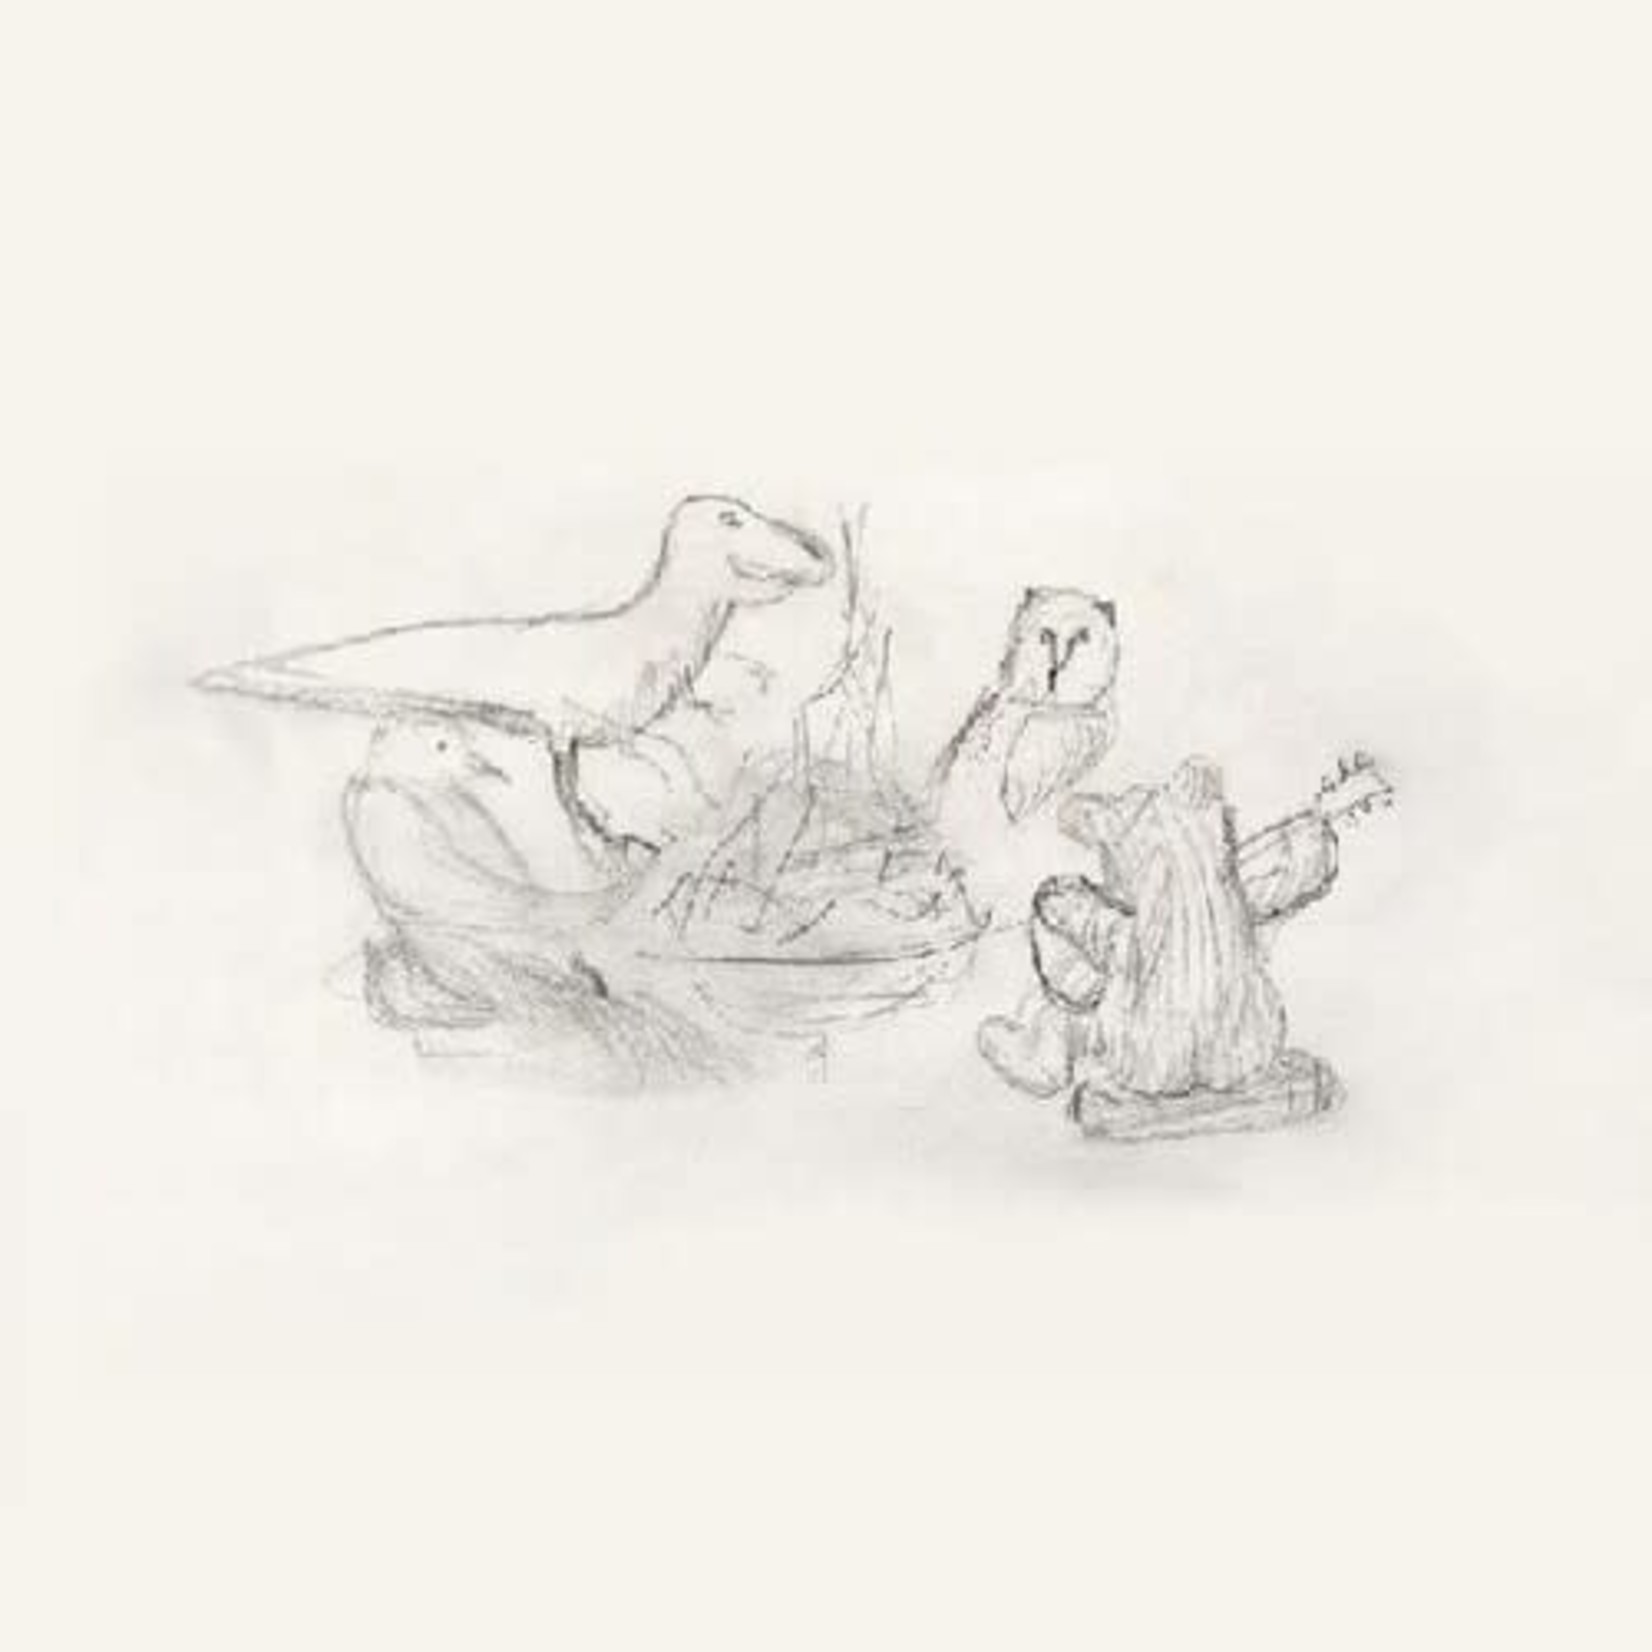 Big Thief - Dragon New Warm Mountain I Believe In You [CD]